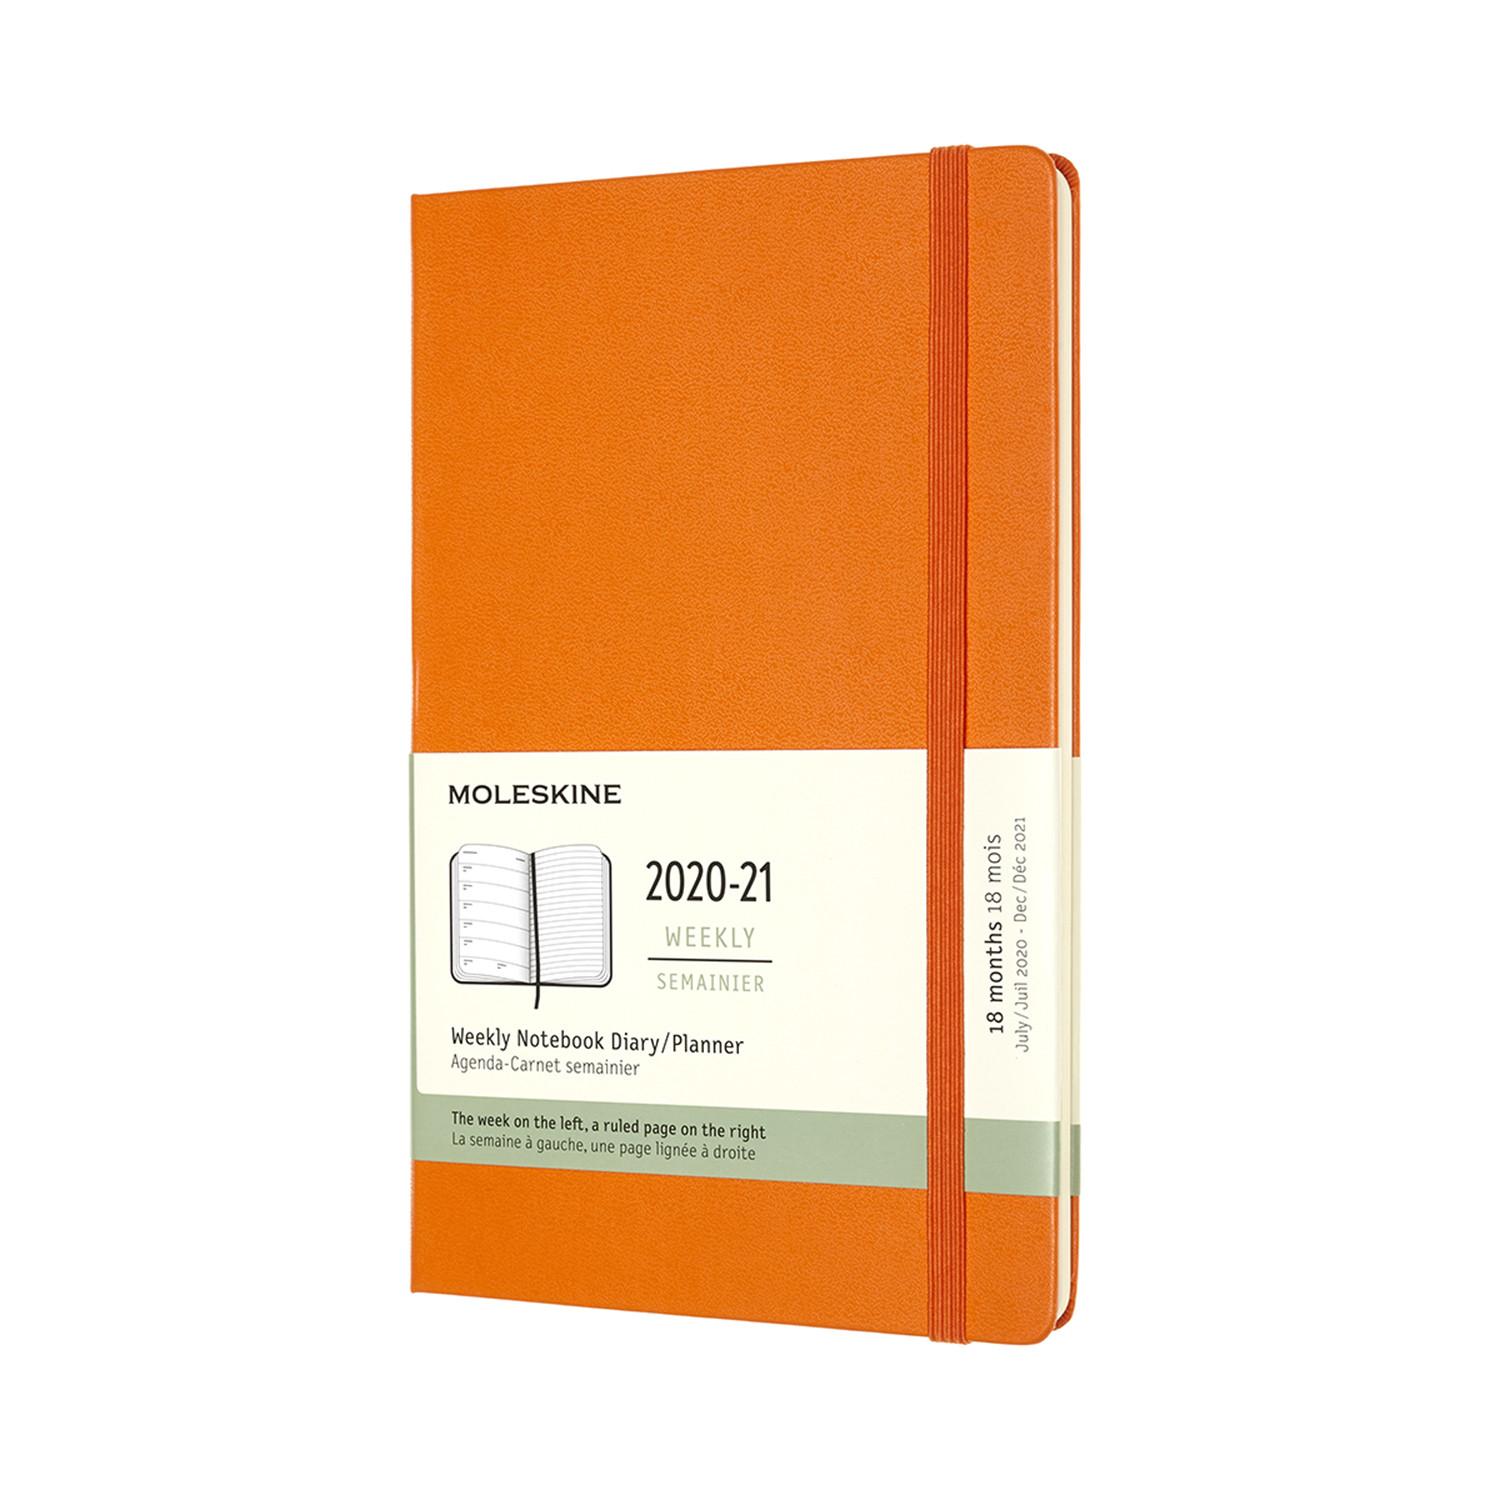 Moleskine 2020-21 18M Weekly Notebook Large CadmiuM ORANGE HARD COVER